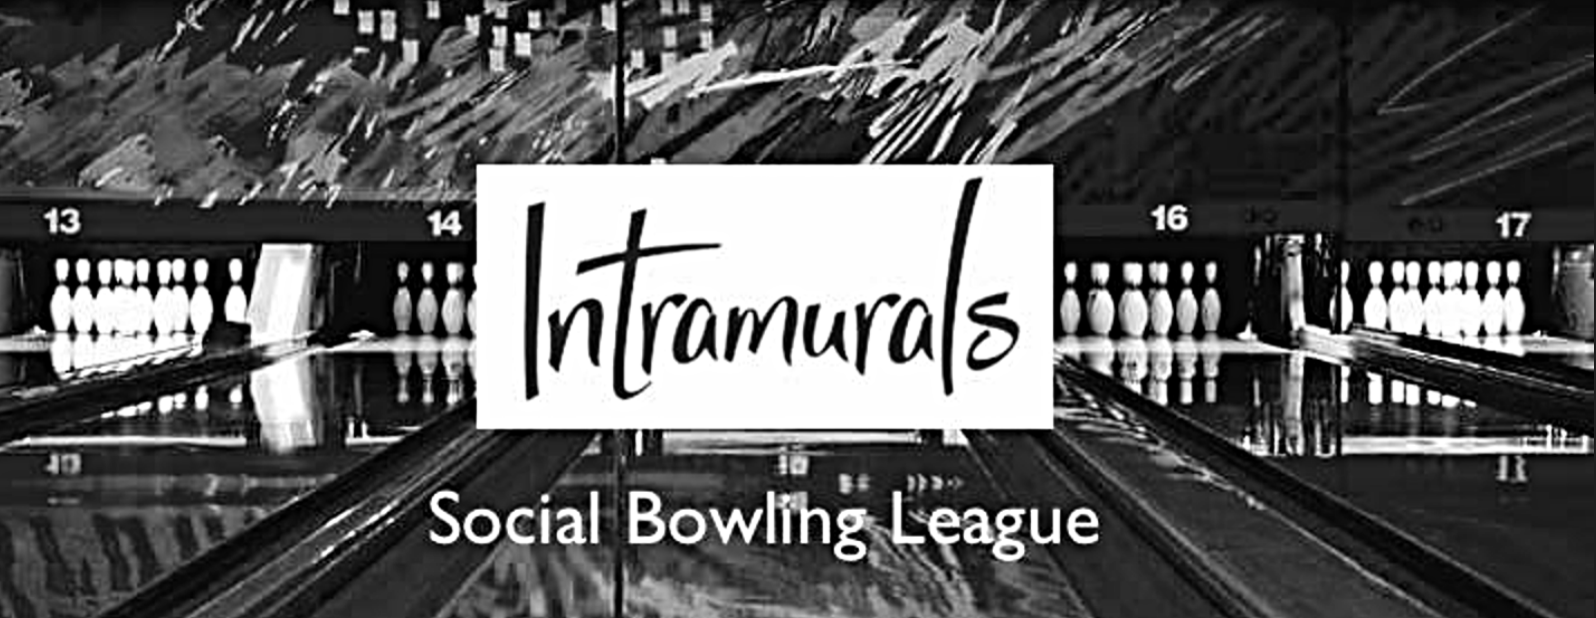 Intramurals Social Bowling League